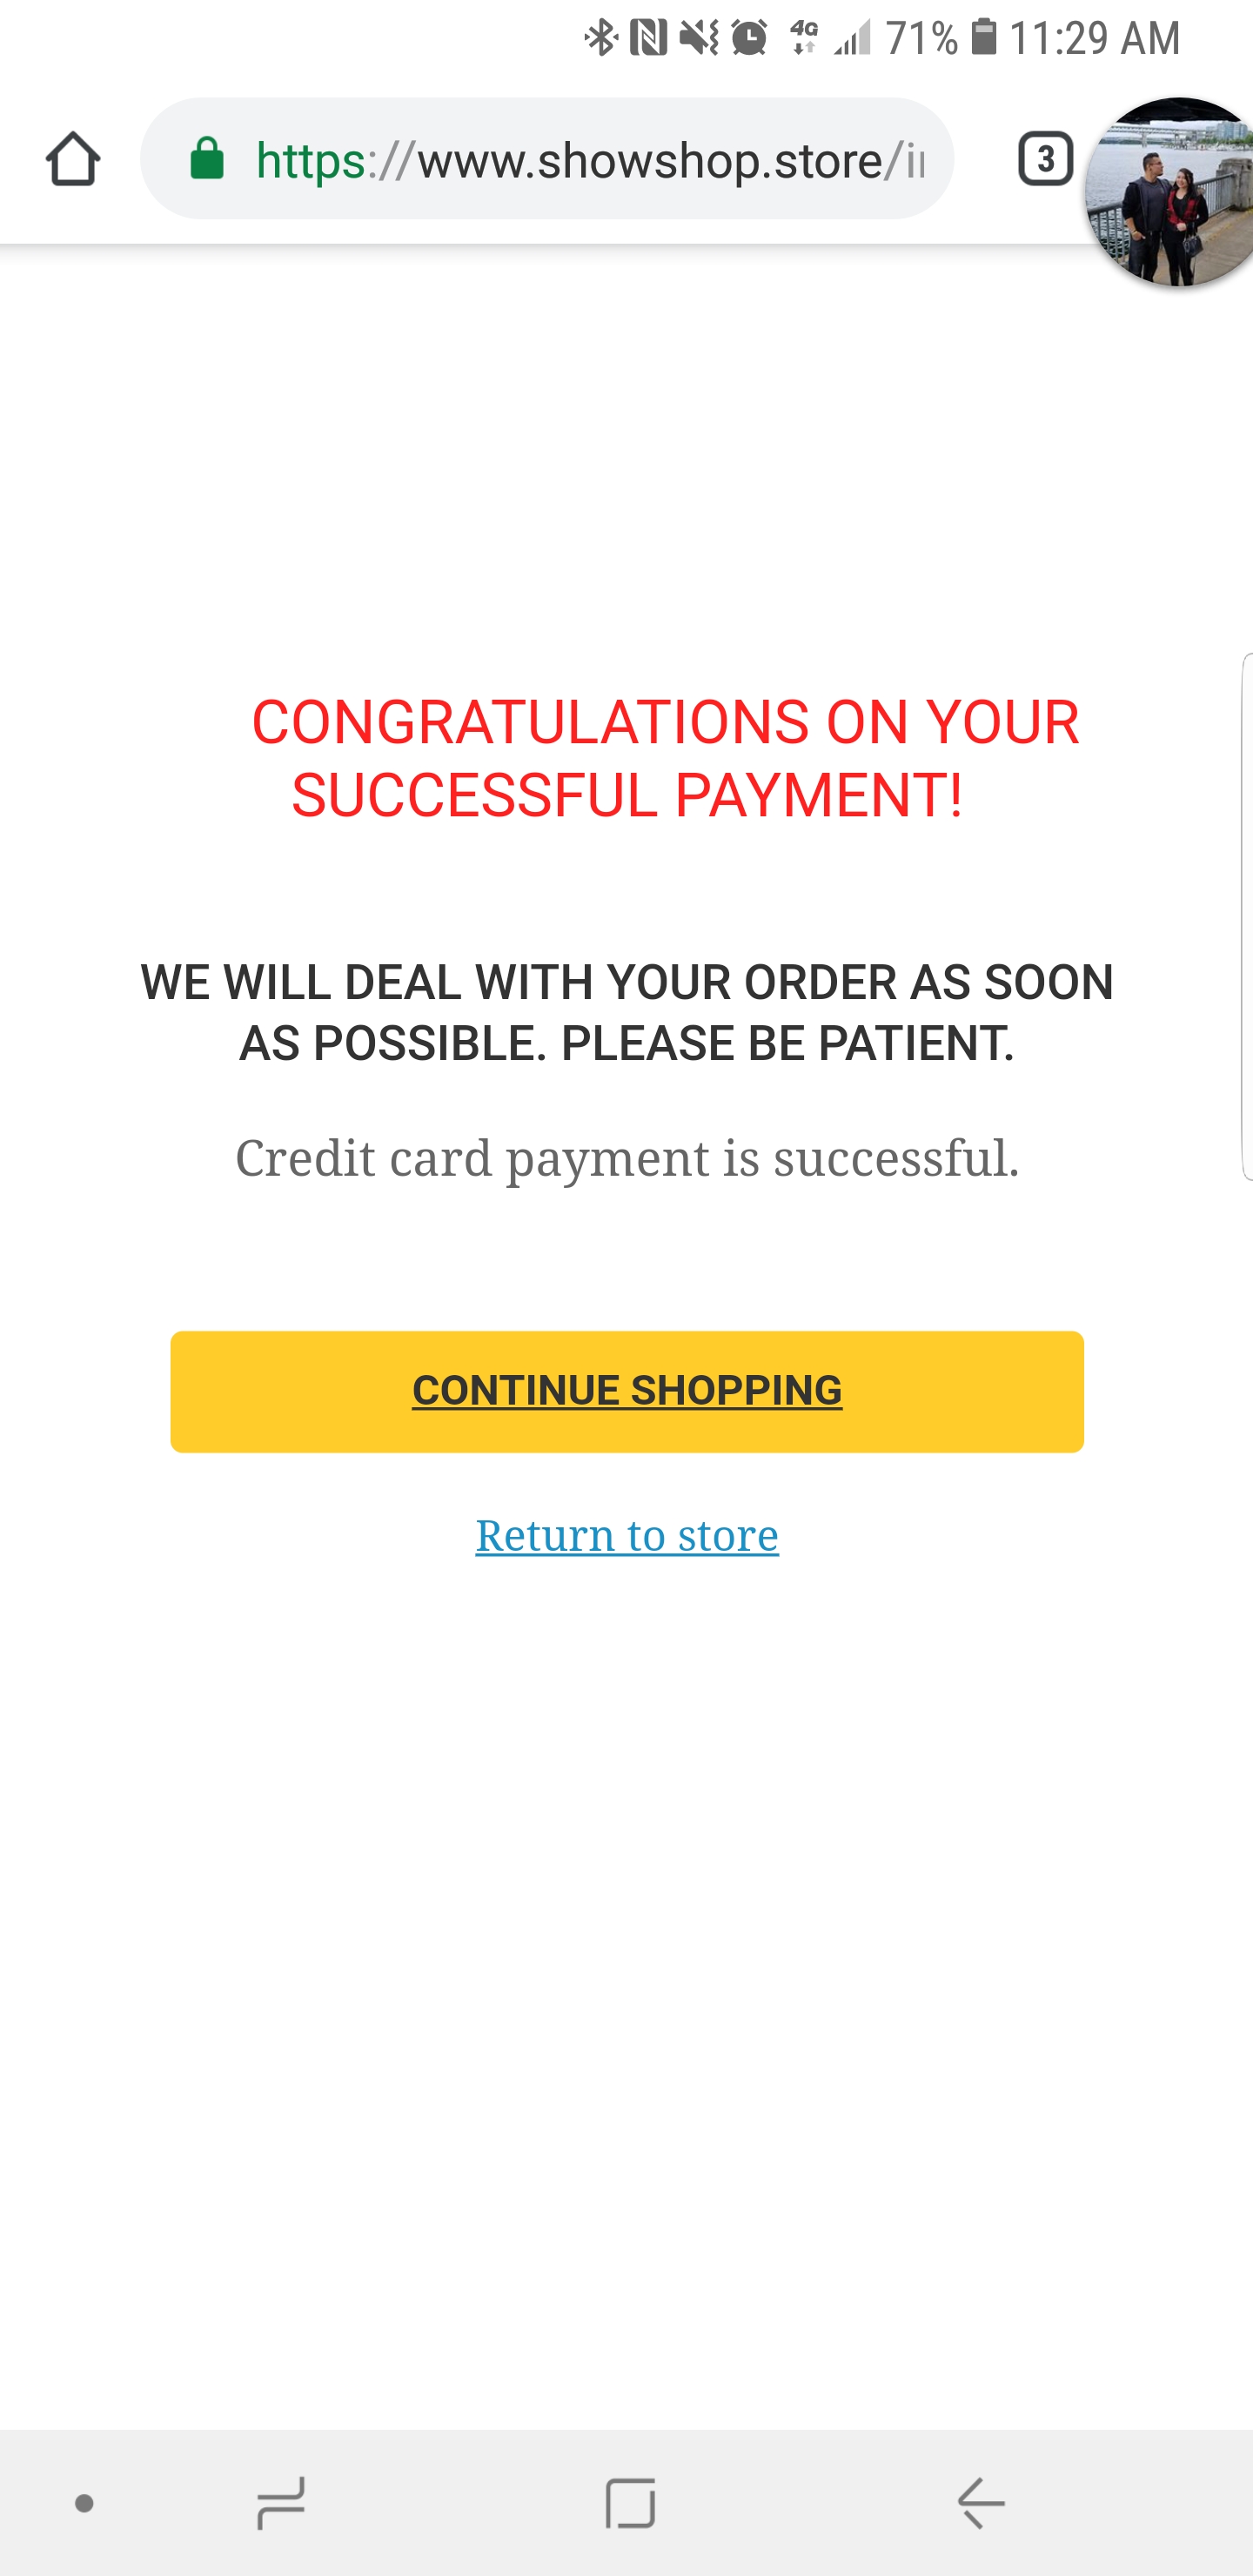 No order number or confirmation 